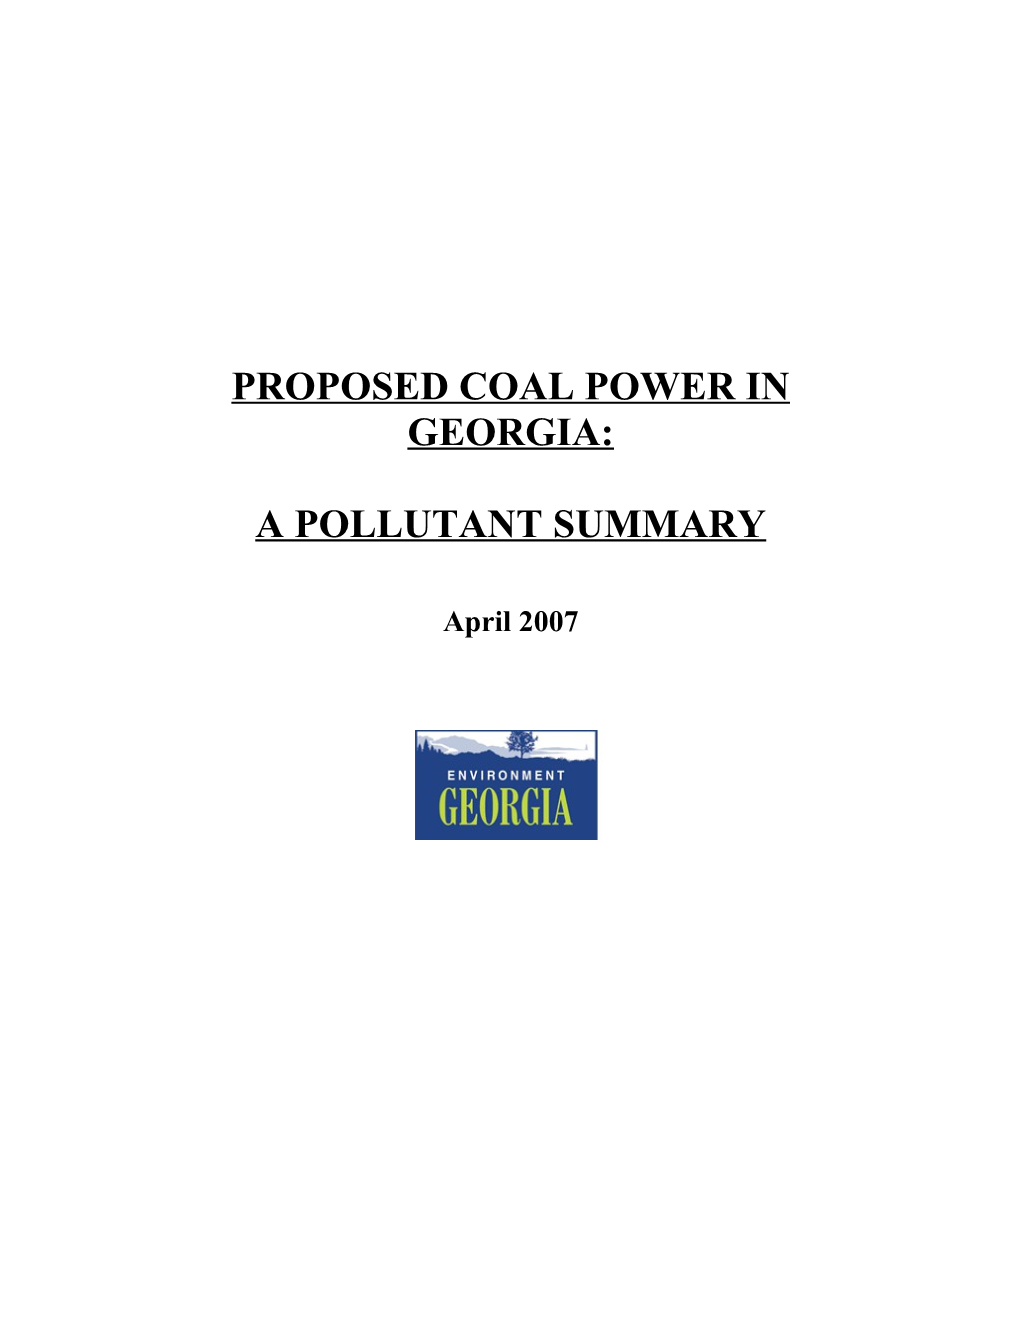 Proposed Coal Power in Georgia